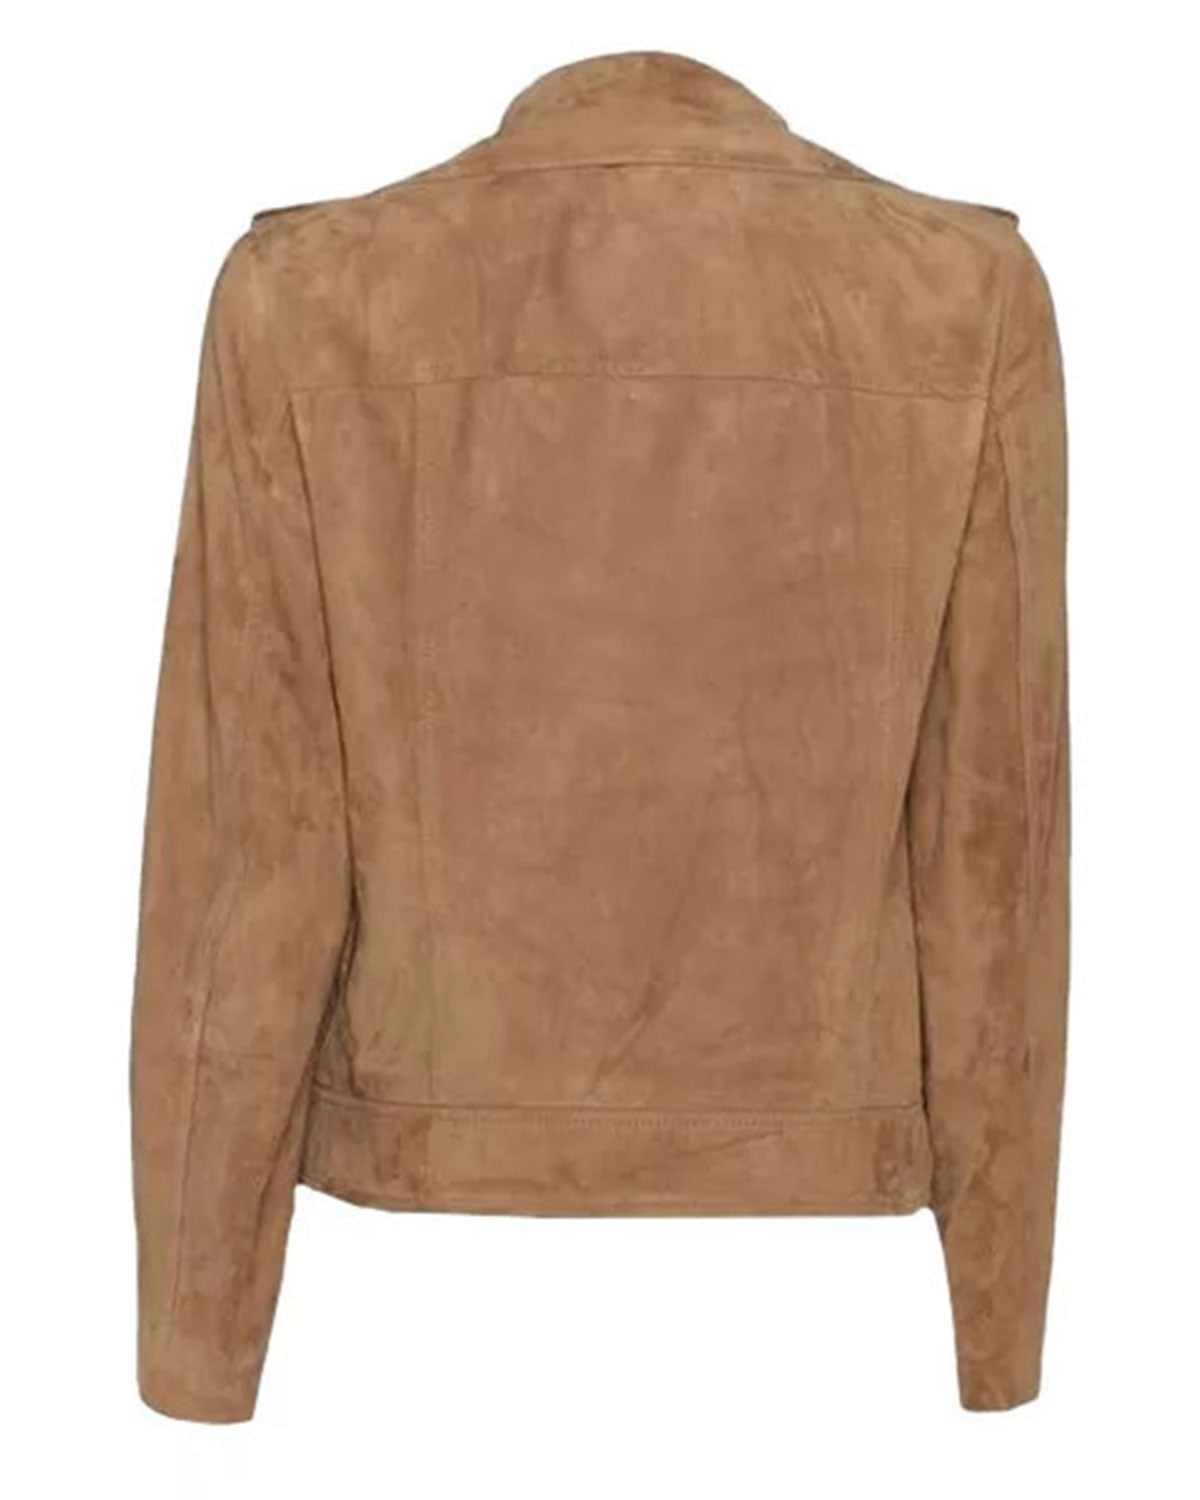 MotorCycleJackets Women’s Brown Suede Leather Jacket